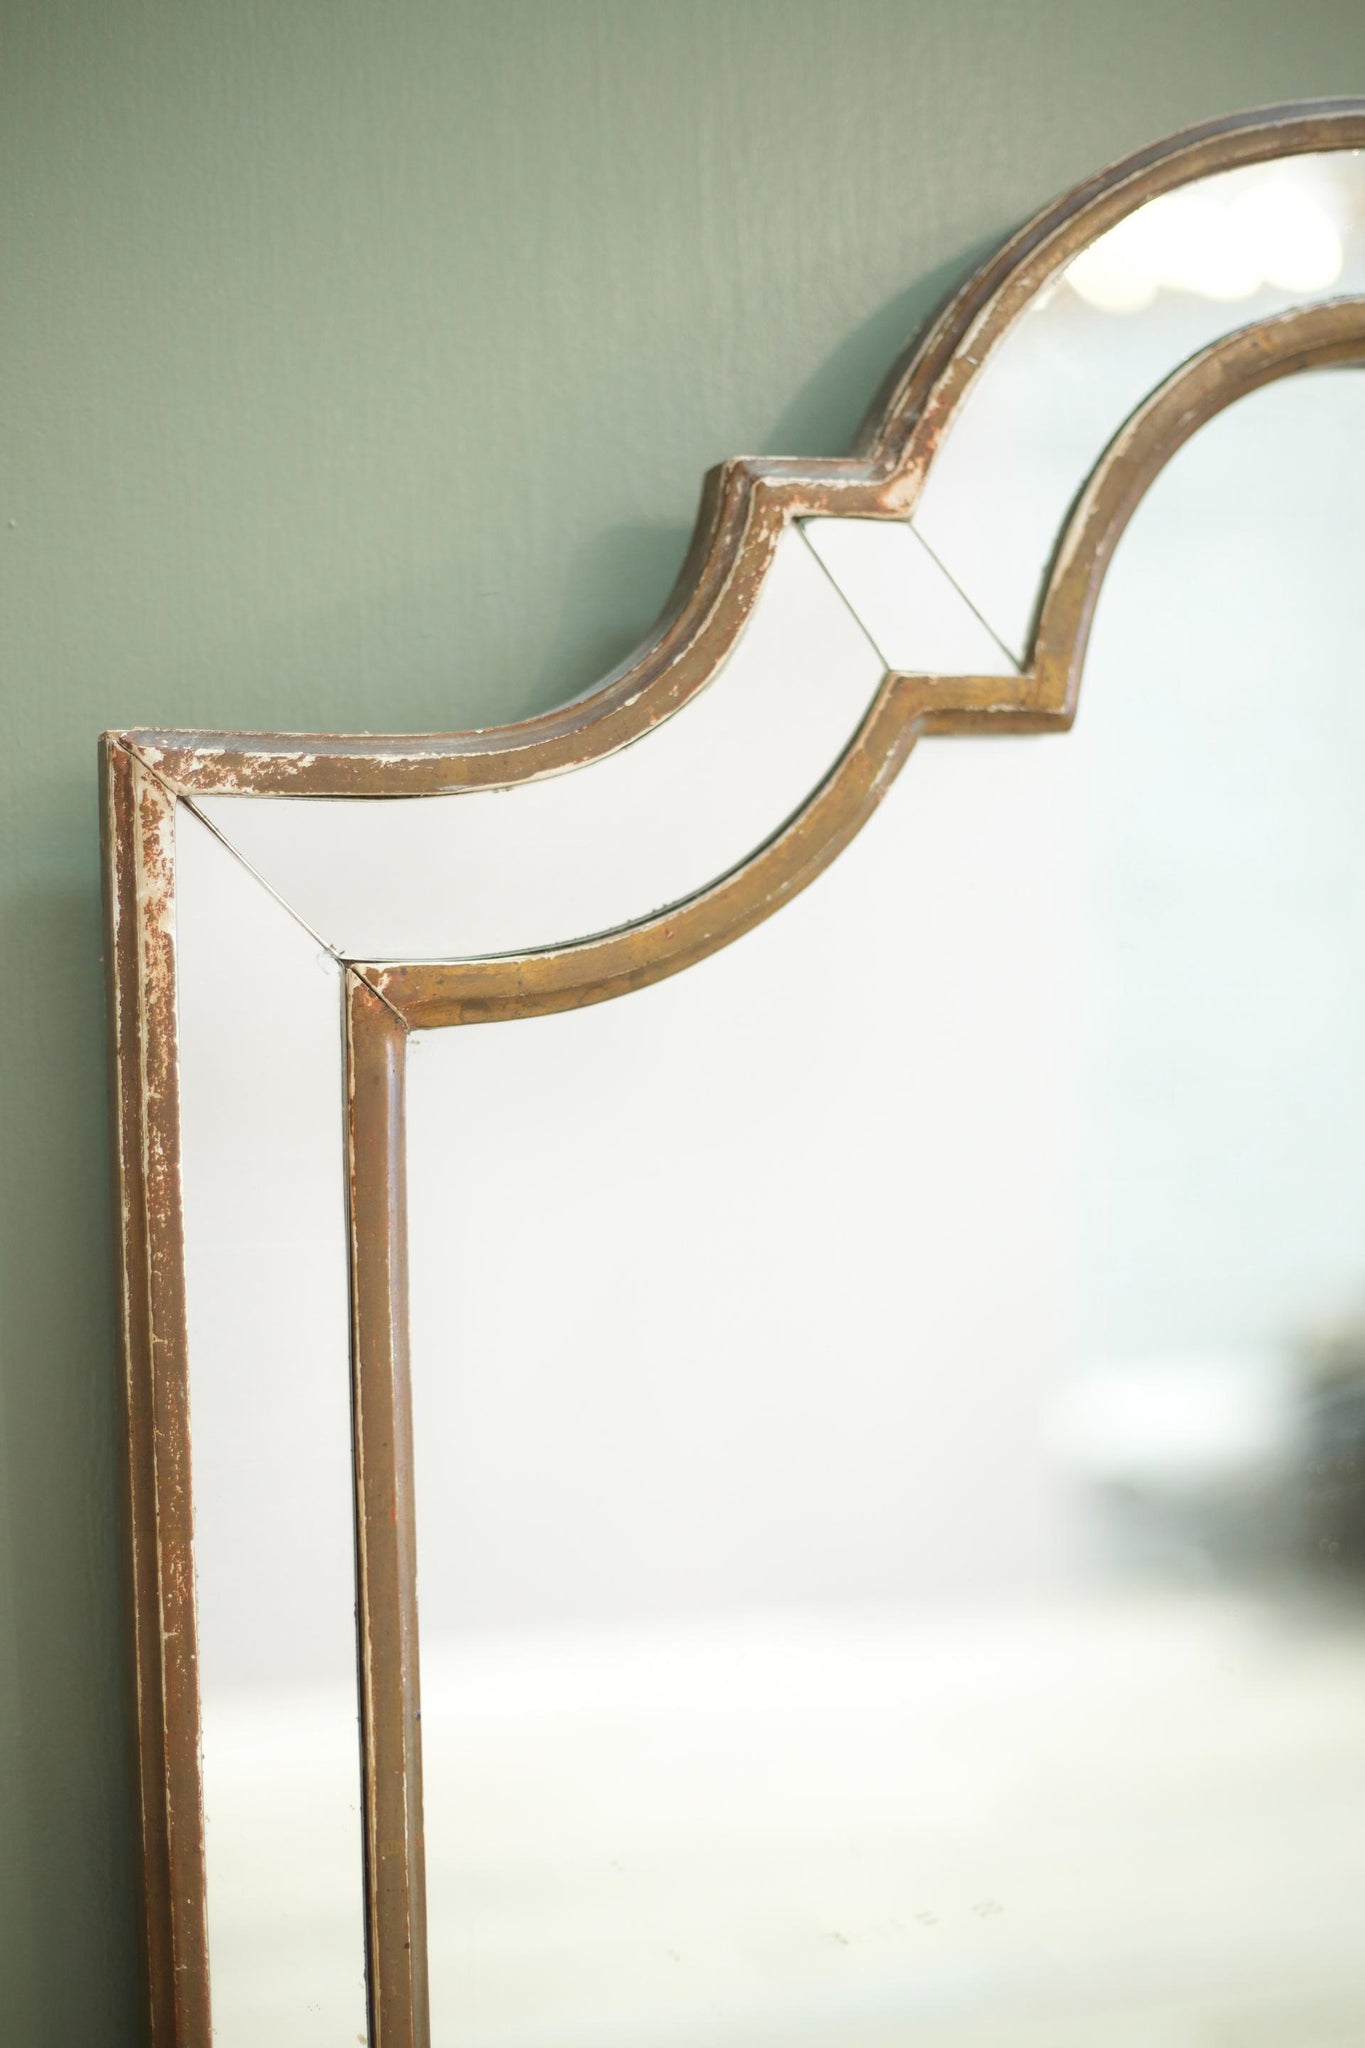 Unusual shaped early 20th century gilt mirror